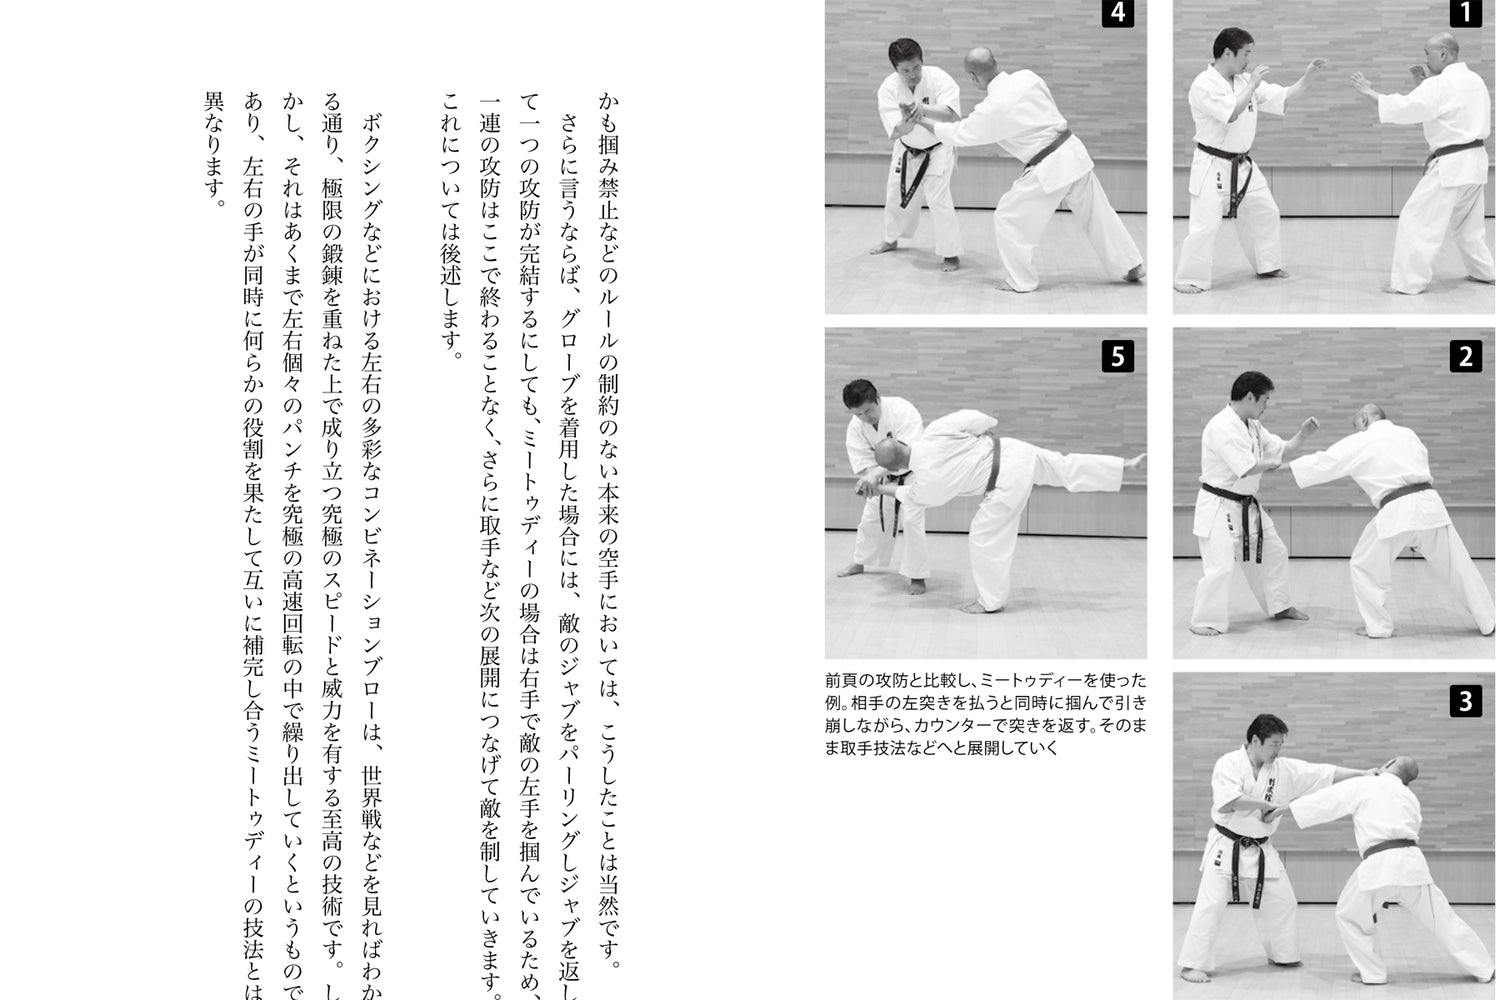 Meotodo of Karate Book by Tetsuji Sato